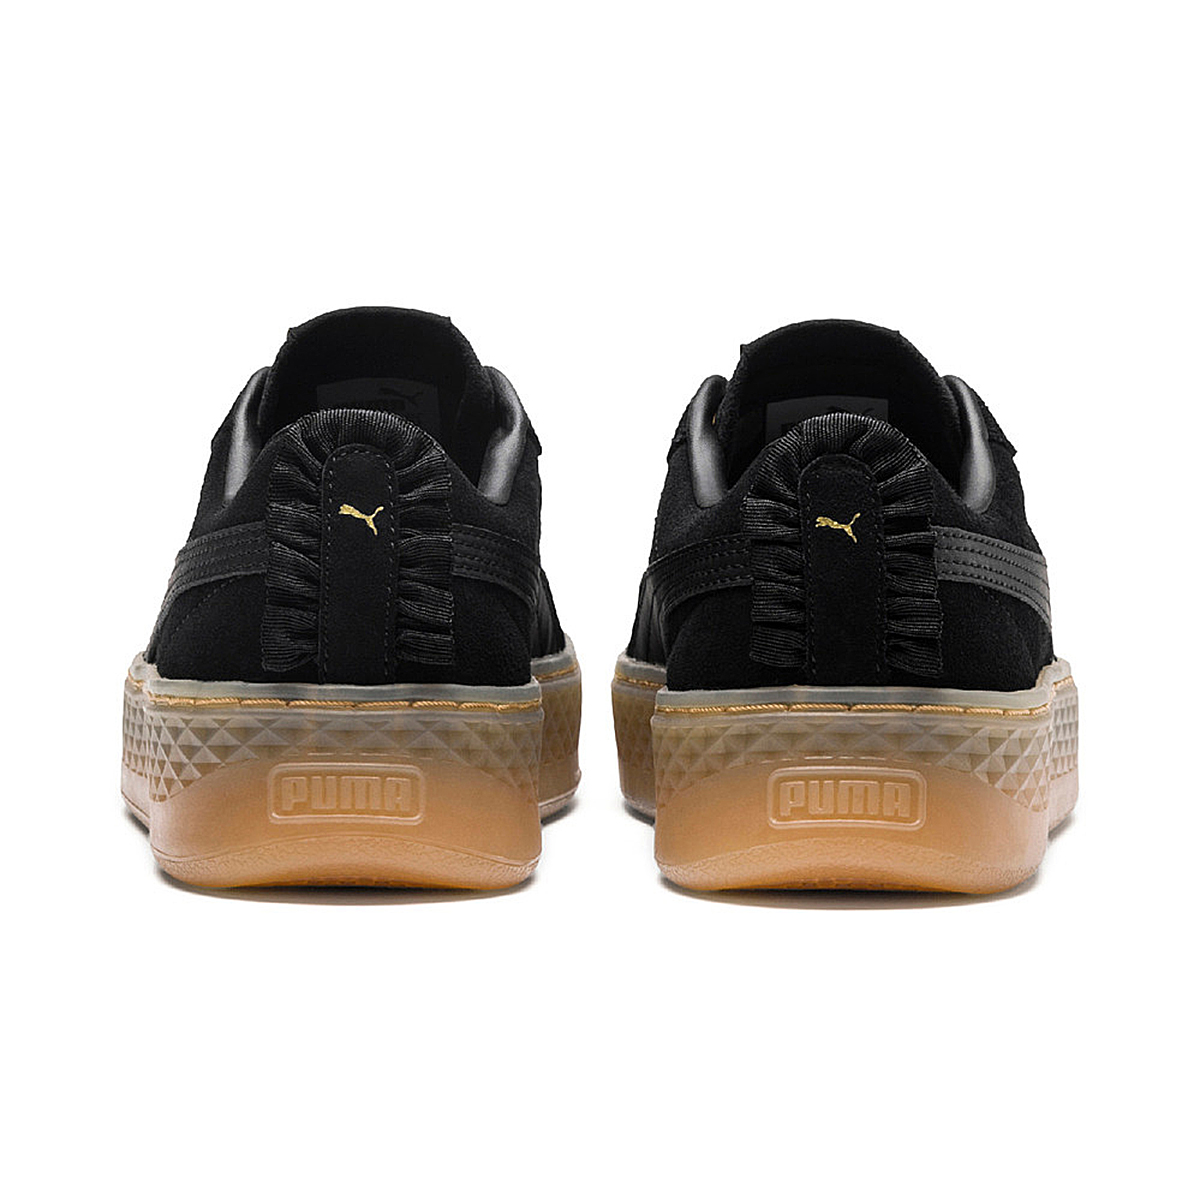 Puma Smash Platform Frill Sneaker Damen Schuhe 366928 01 schwarz